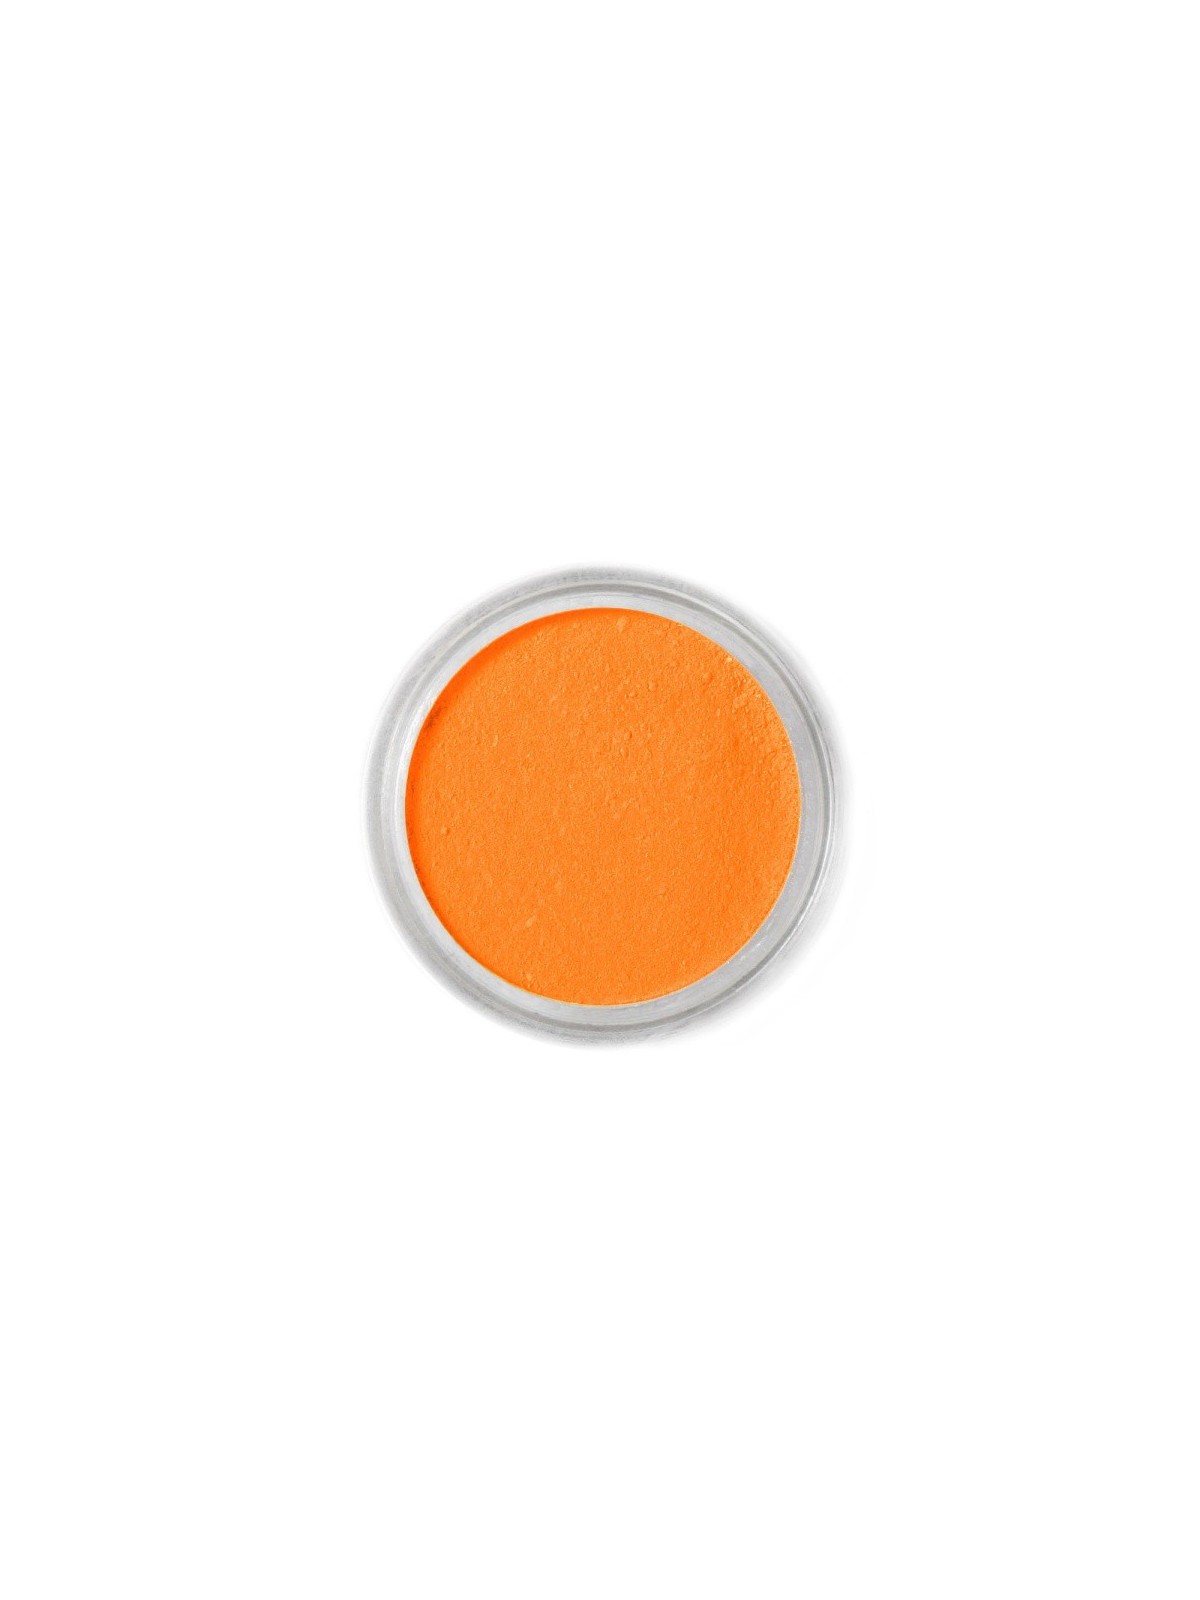 Jadalna farba proszkowa Fractal - Mandarin (1,7 g)